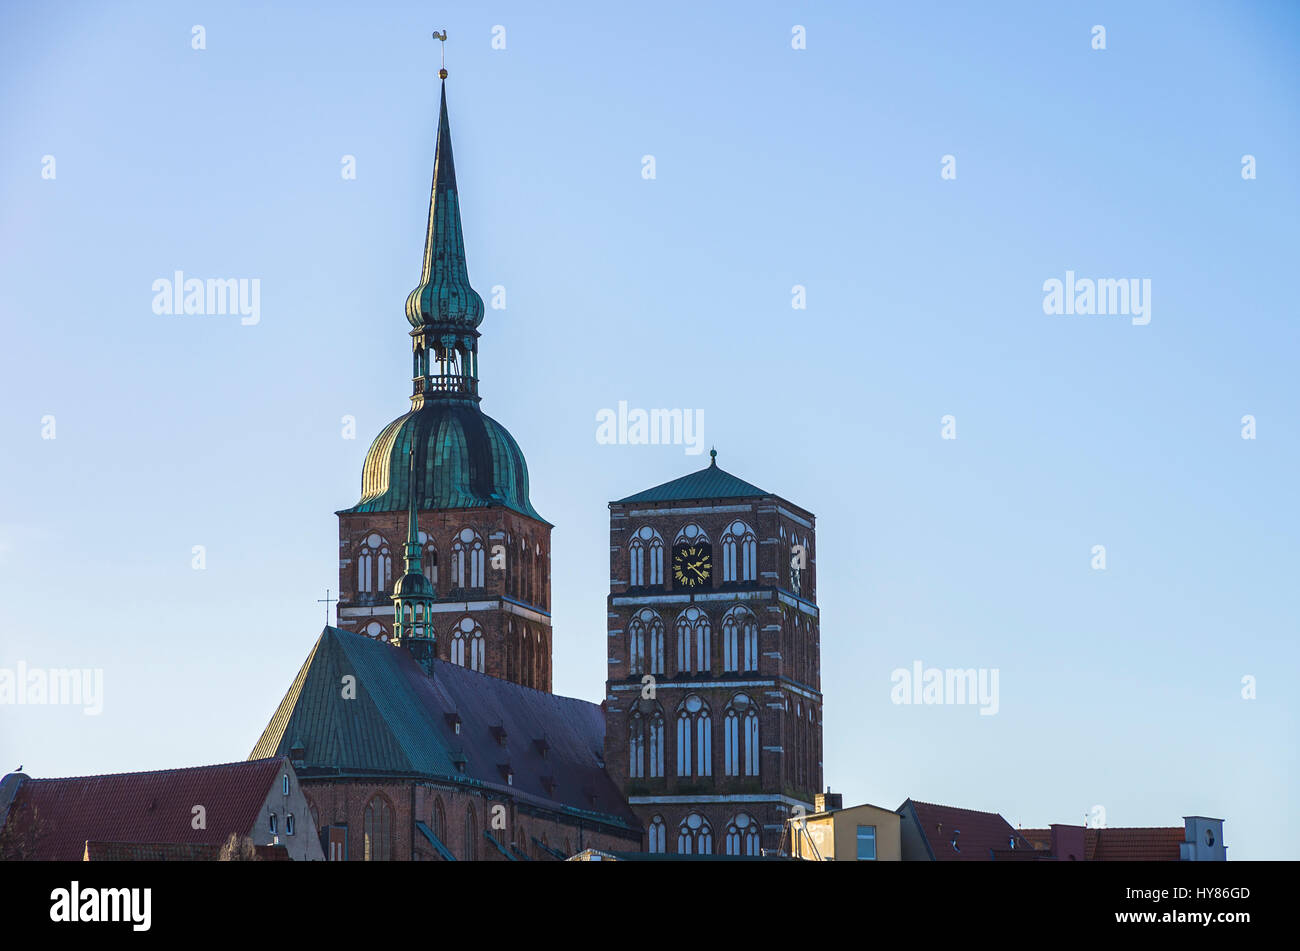 View of St. Nicholas' Church, Hanseatic City of Stralsund, Mecklenburg-Pomerania, Germany. Blick auf die Nikolaikirche, Hansestadt Stralsund, Mecklenb Stock Photo